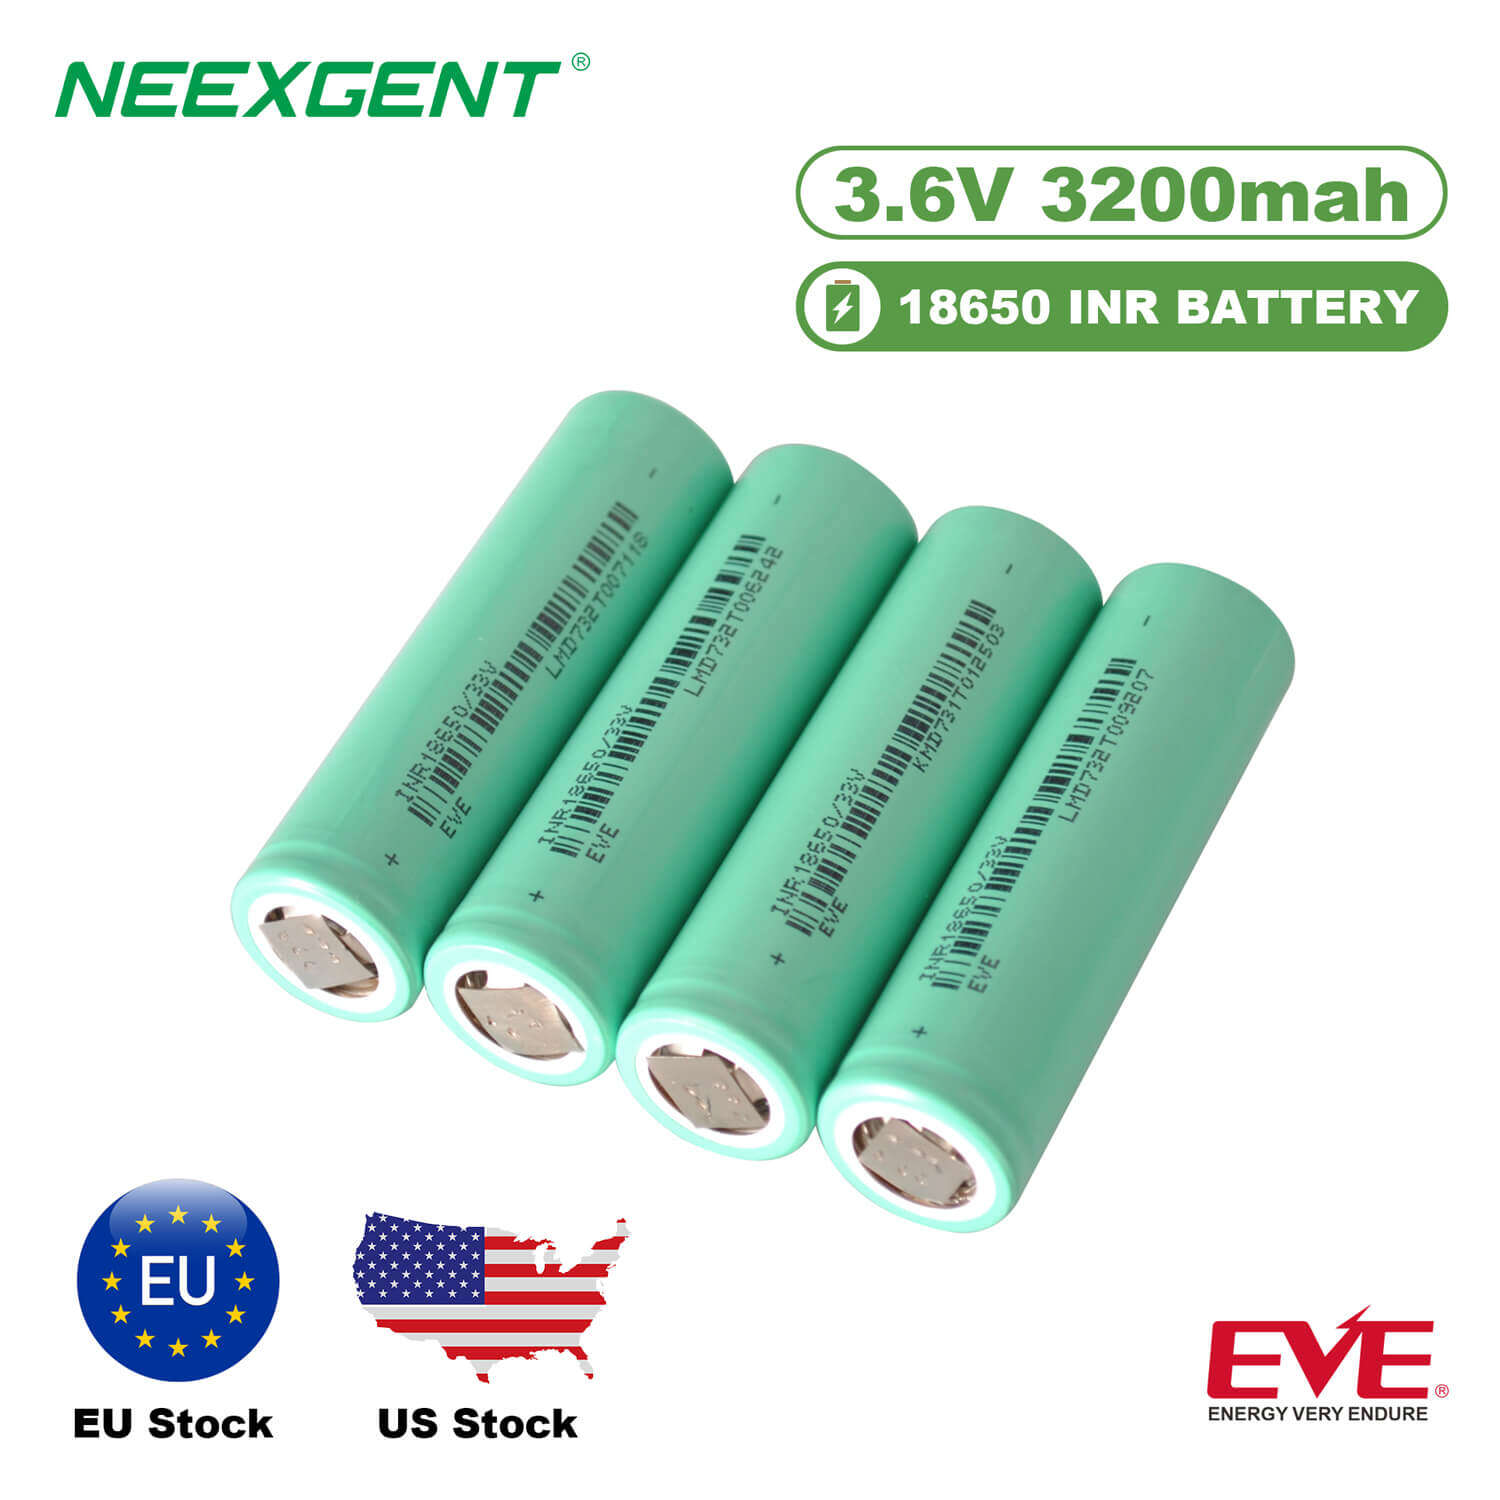 Neexgent EVE 18650 33V 3200mah 3.6V INR Battery